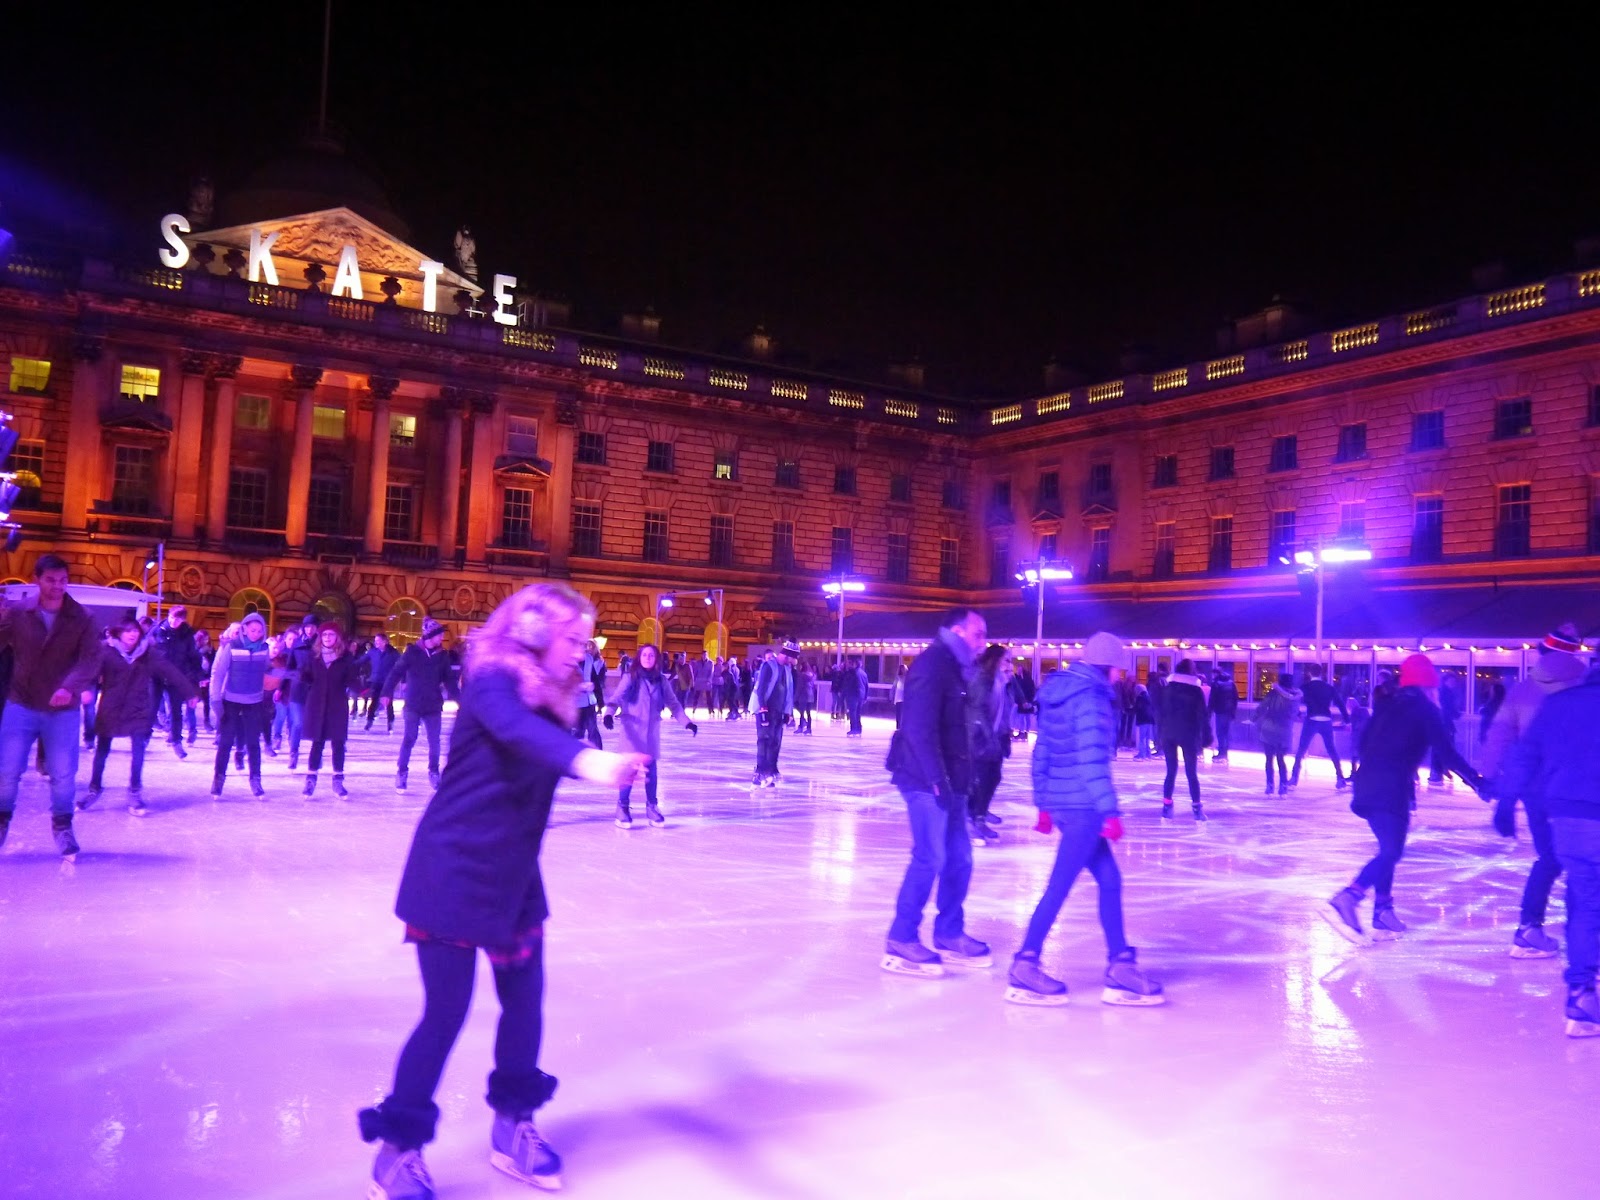 Somerset House skating